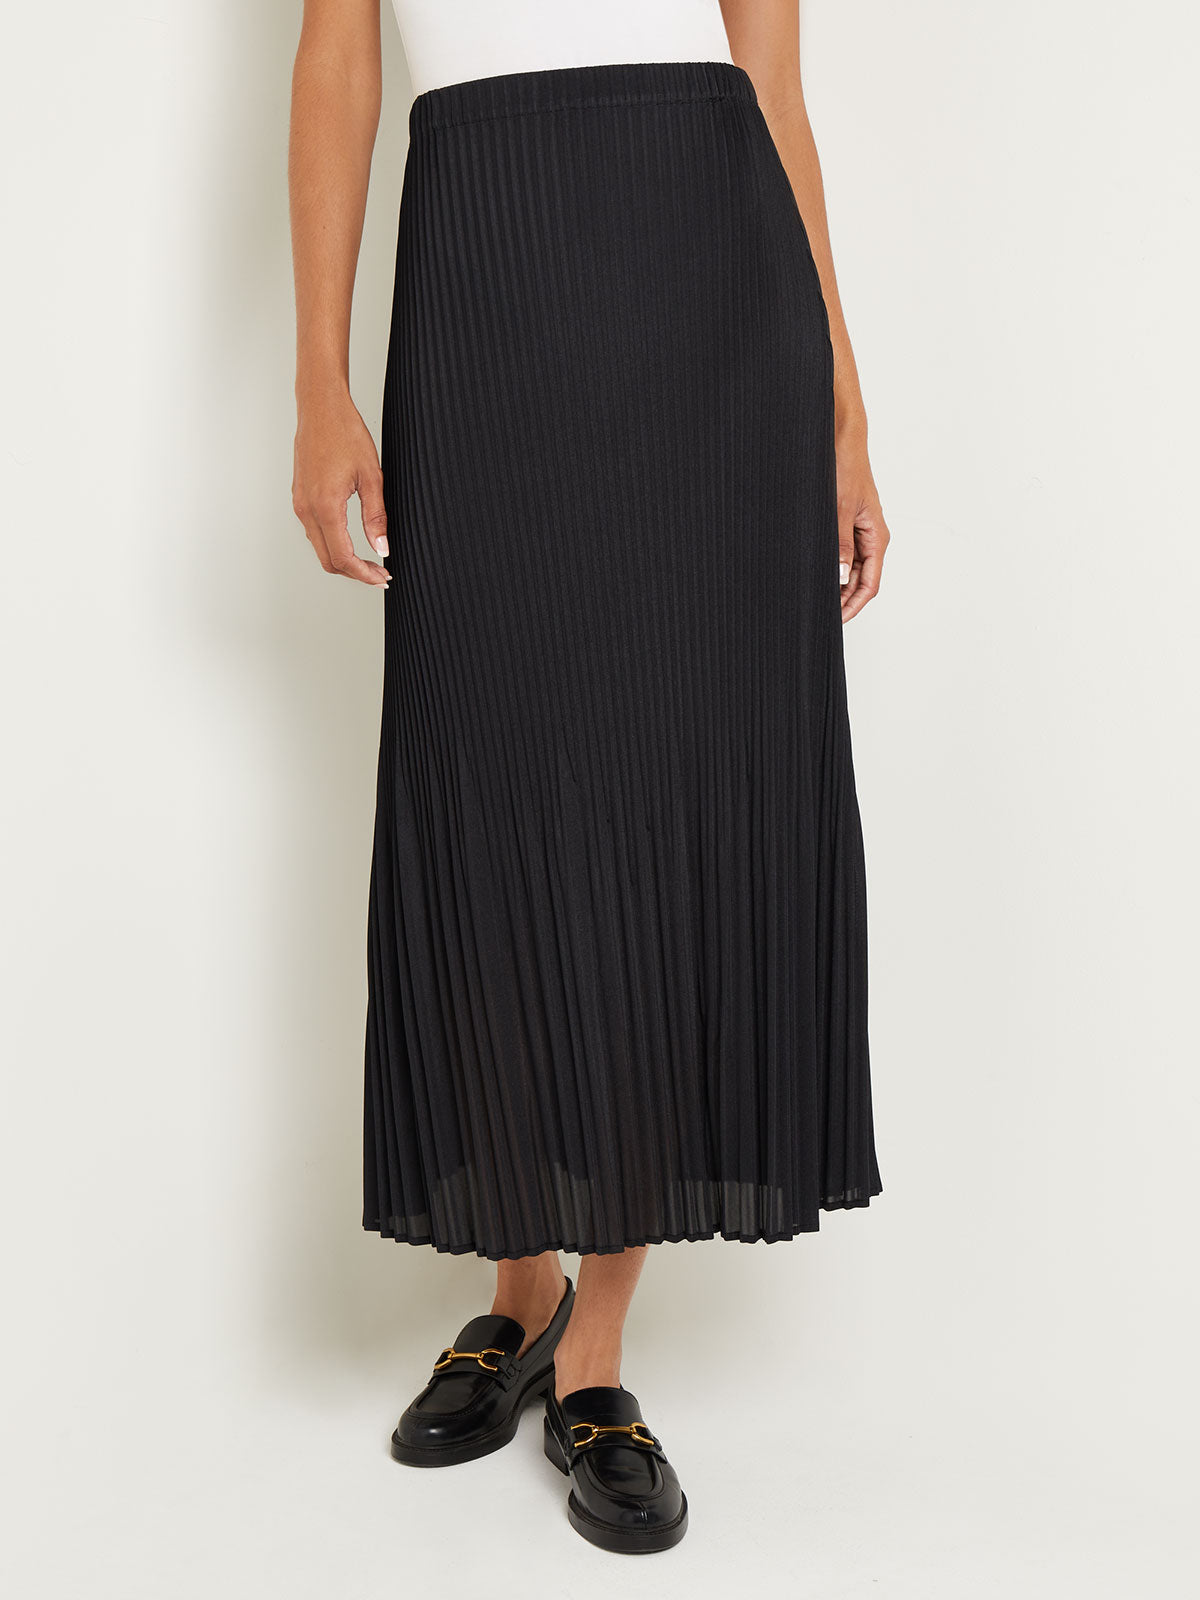 Mixed Stripes Tiered Mini Skirt - Women - Ready-to-Wear